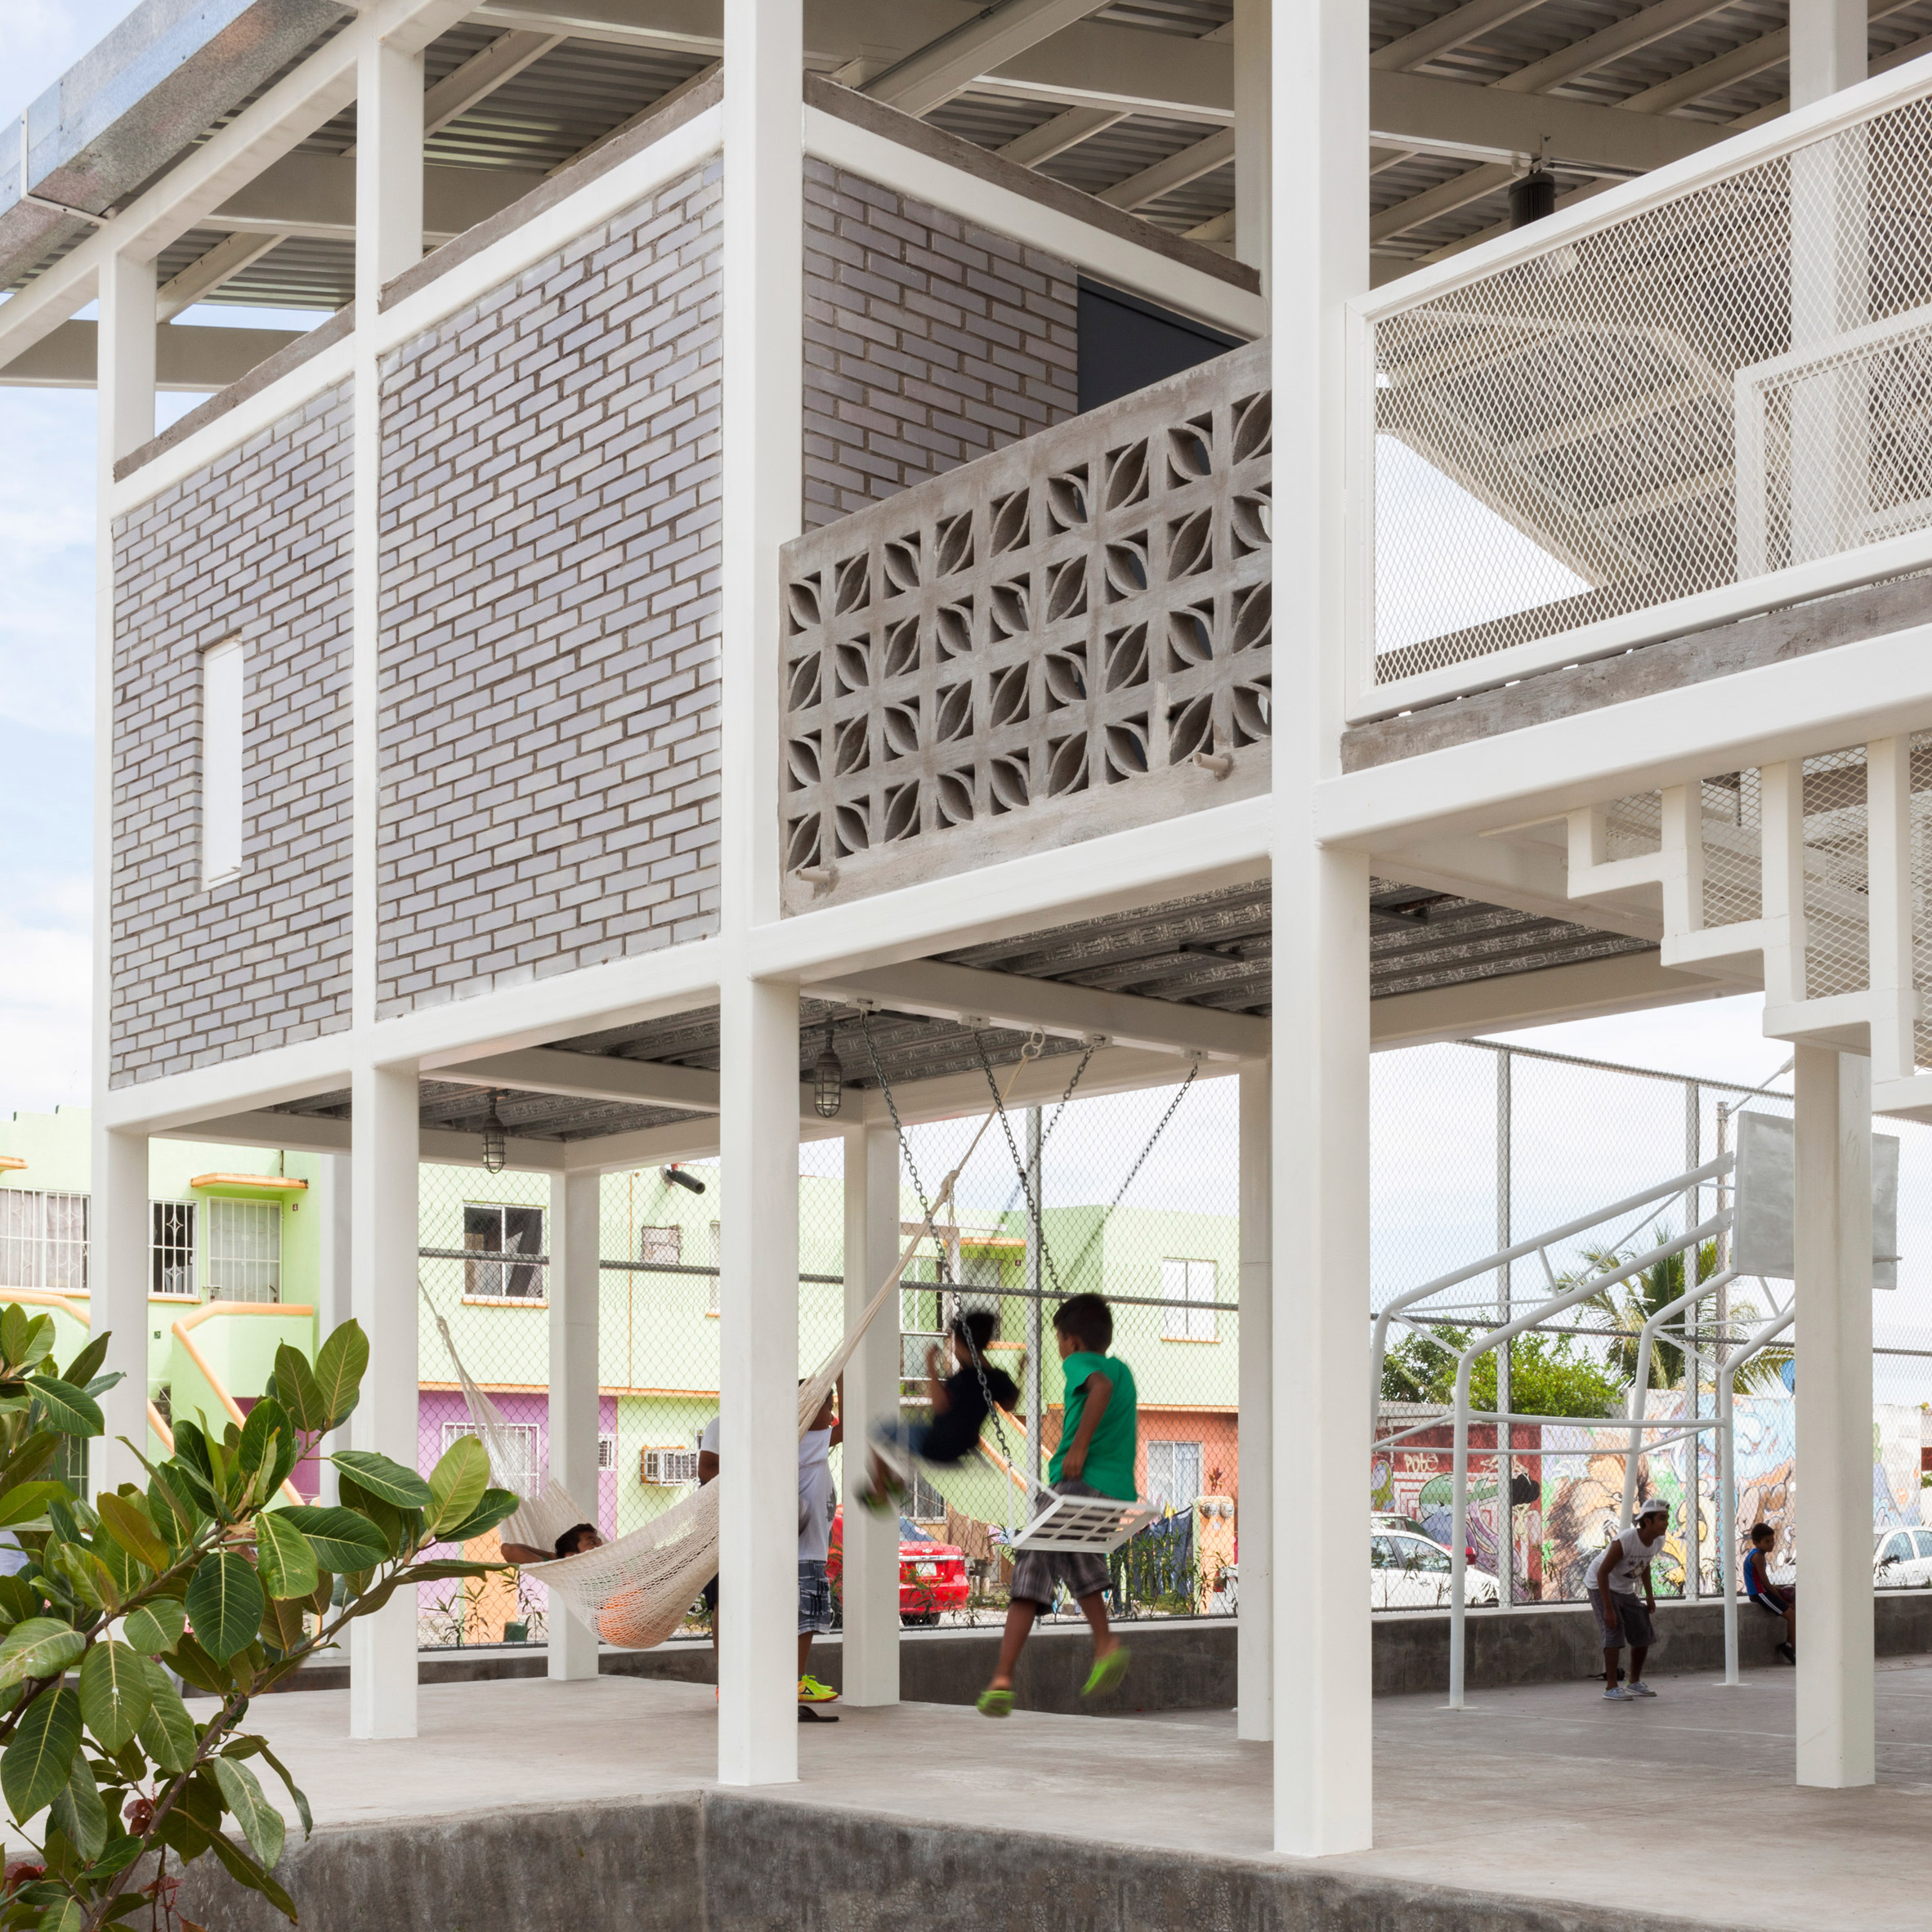 Pitched-roof structure revitalises public space at Veracruz port-0